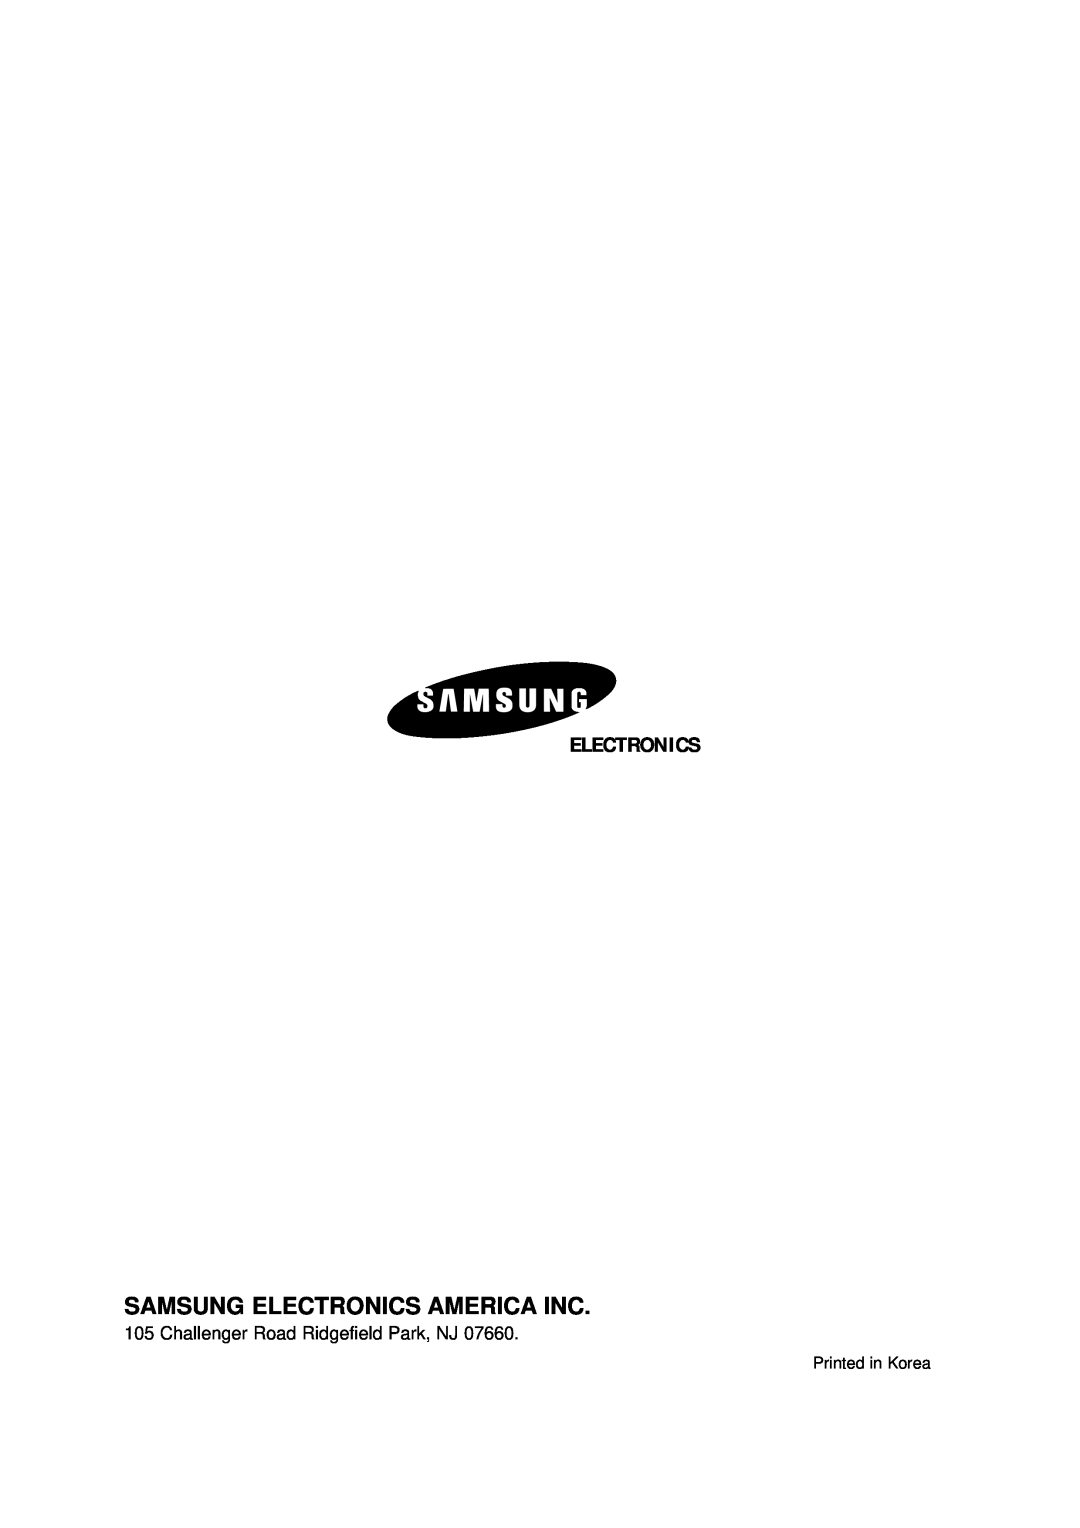 Samsung AW0719, AW0819 manual Challenger Road Ridgefield Park, NJ, Samsung Electronics America Inc 